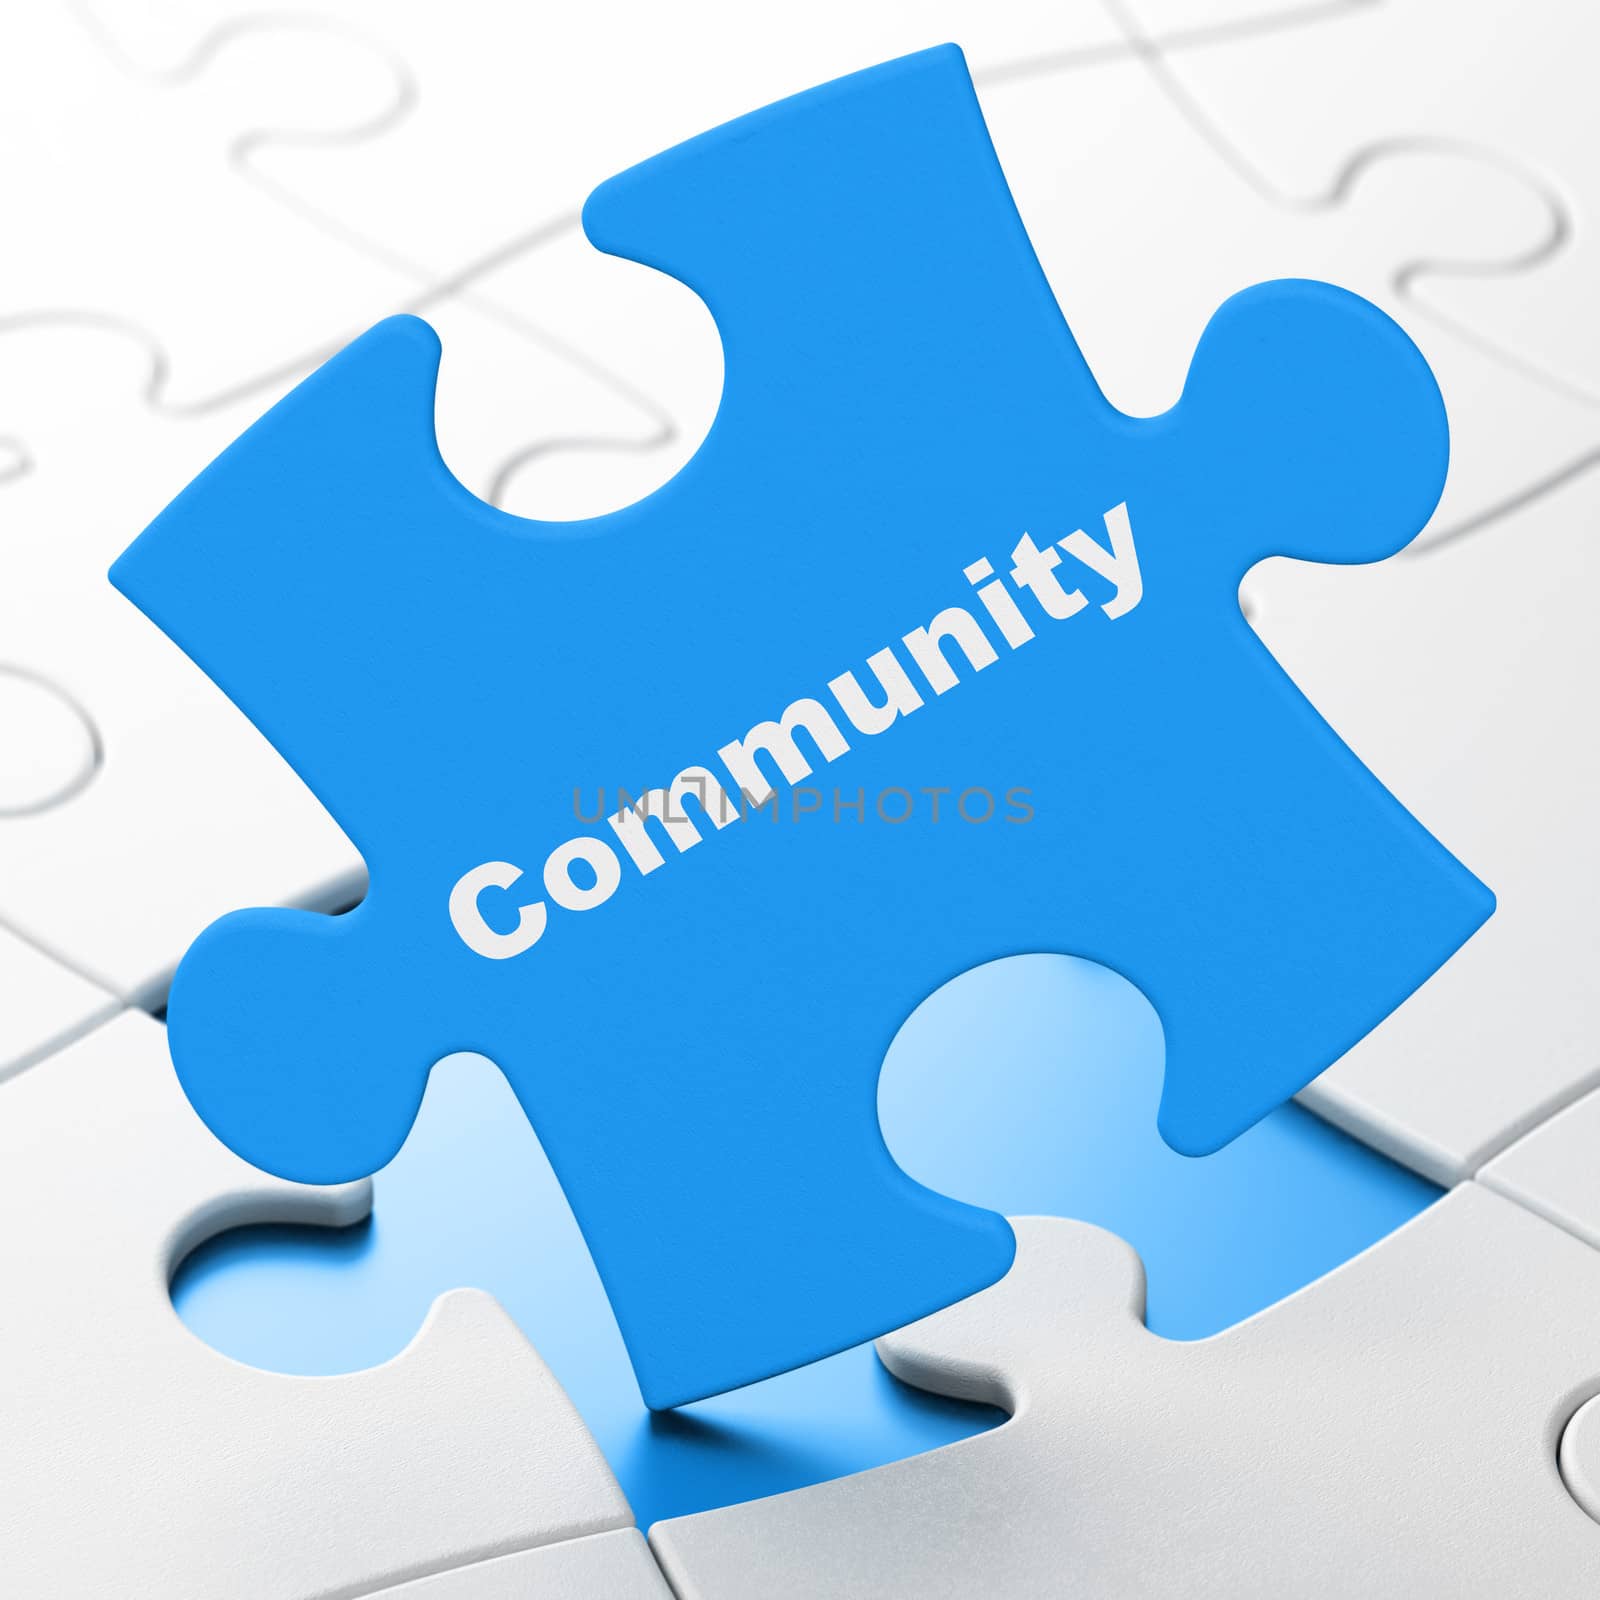 Social network concept: Community on Blue puzzle pieces background, 3d render